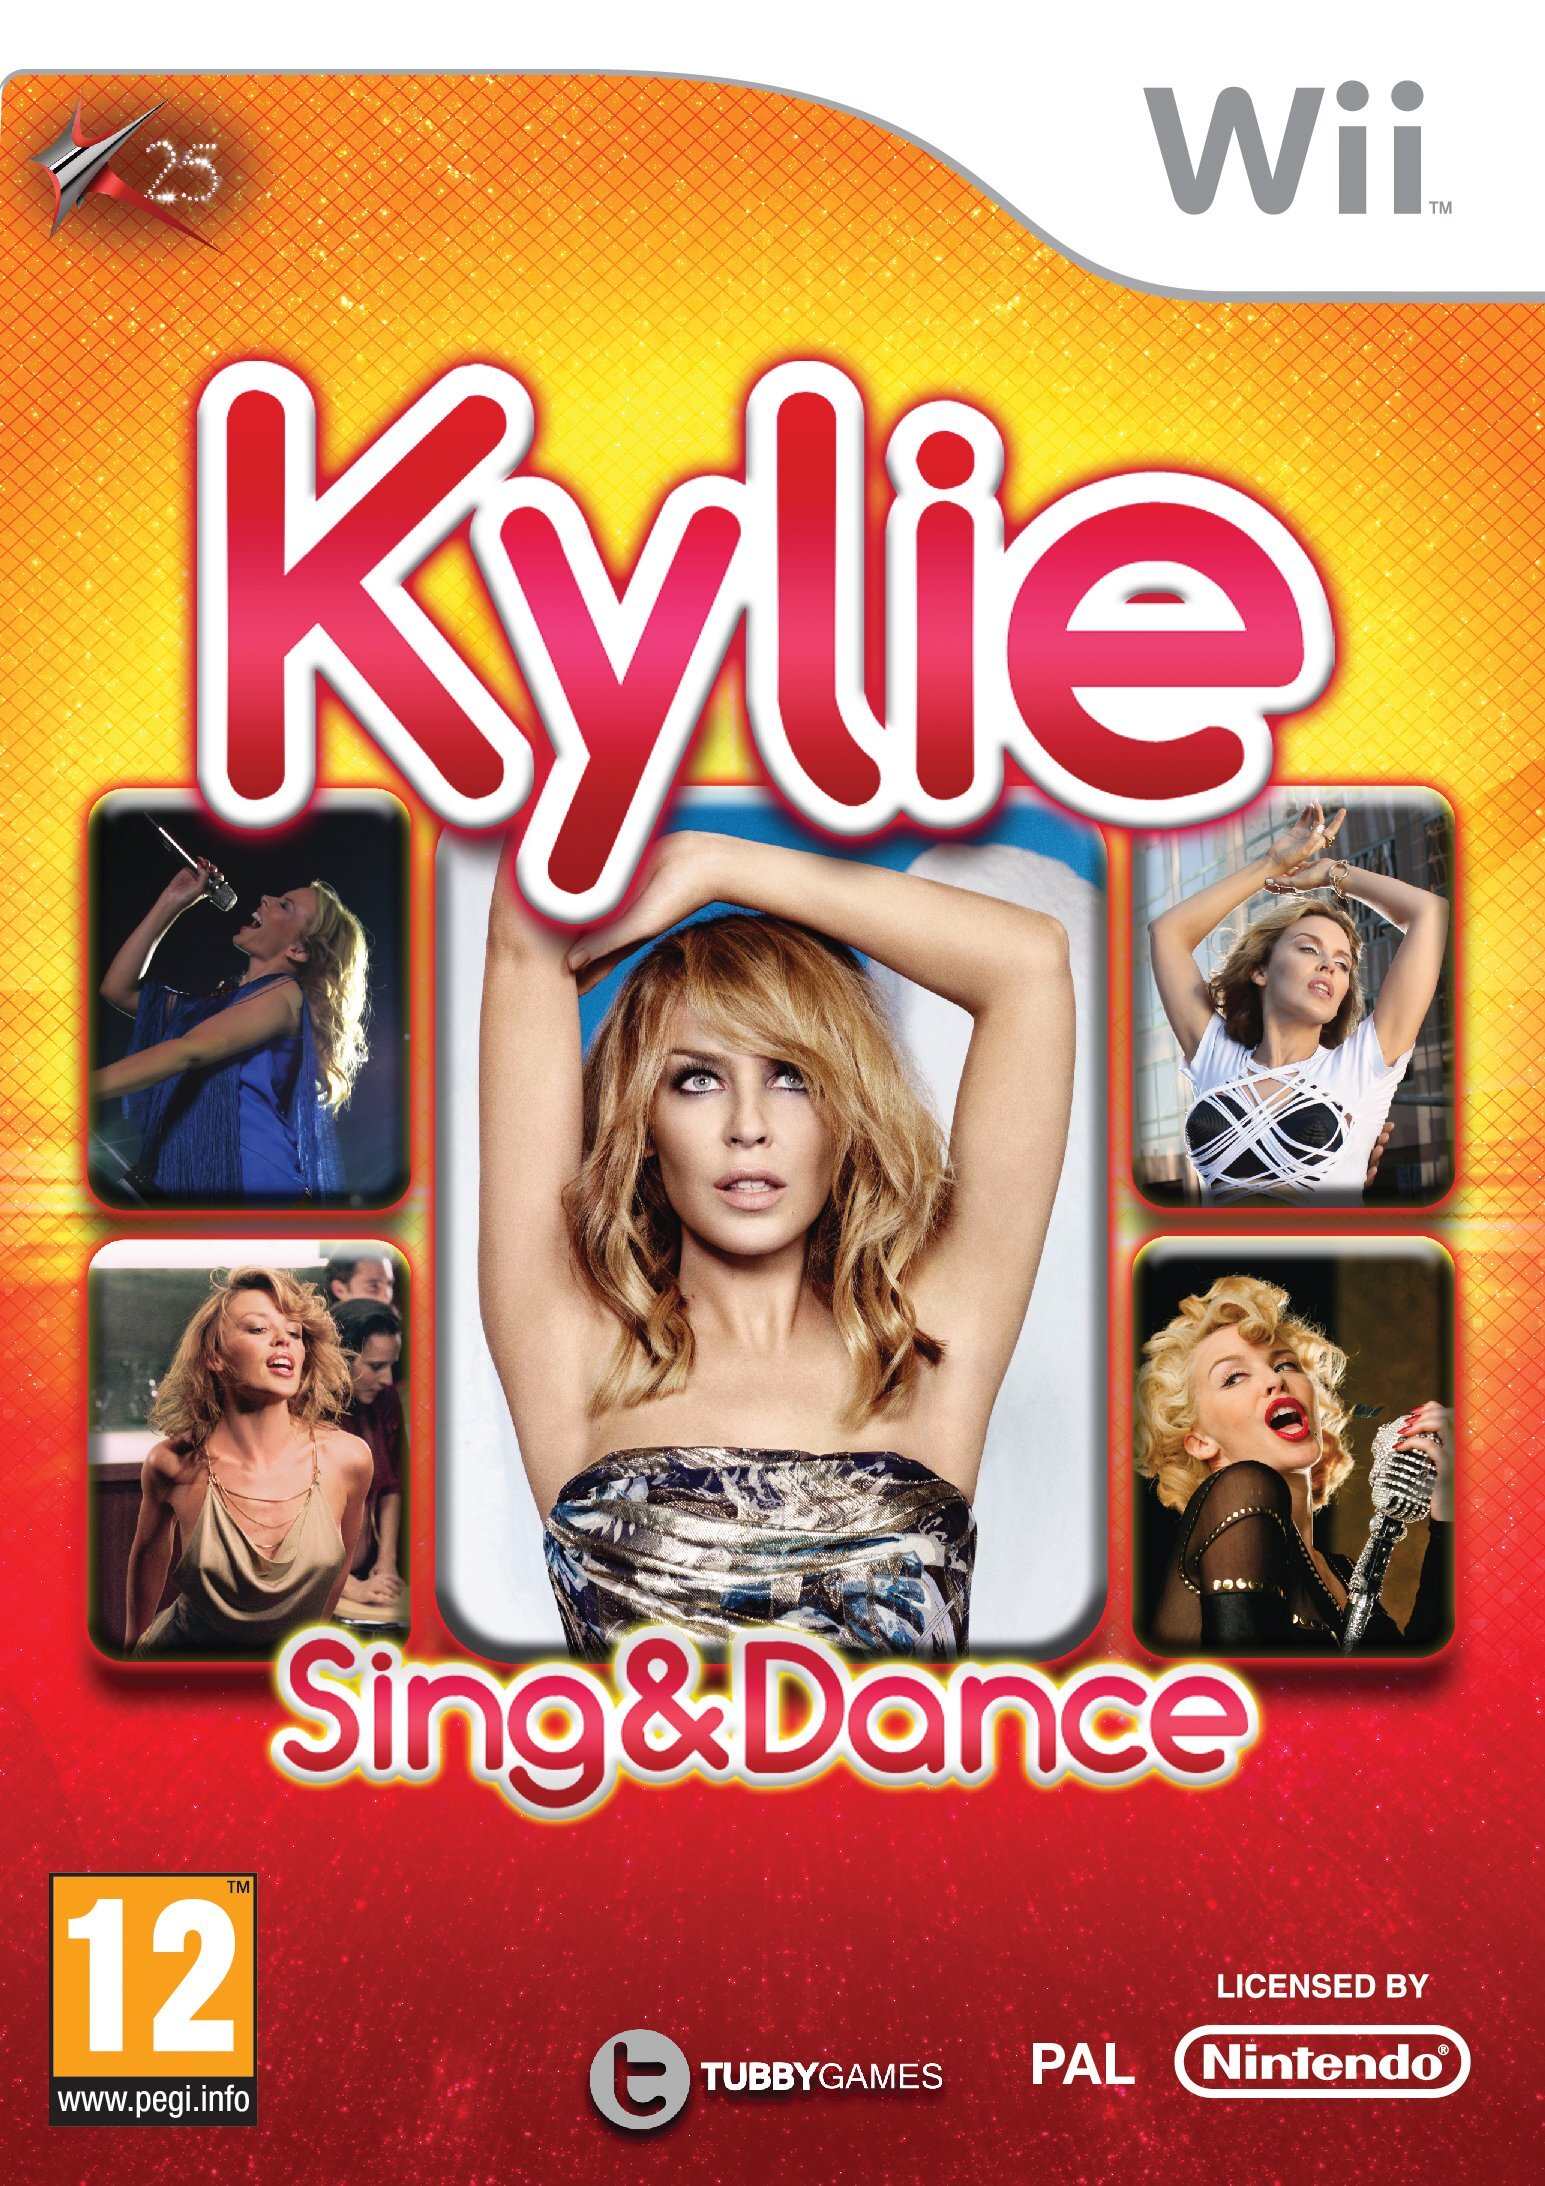 Koch Media Kylie Sing & Dance Nintendo Wii